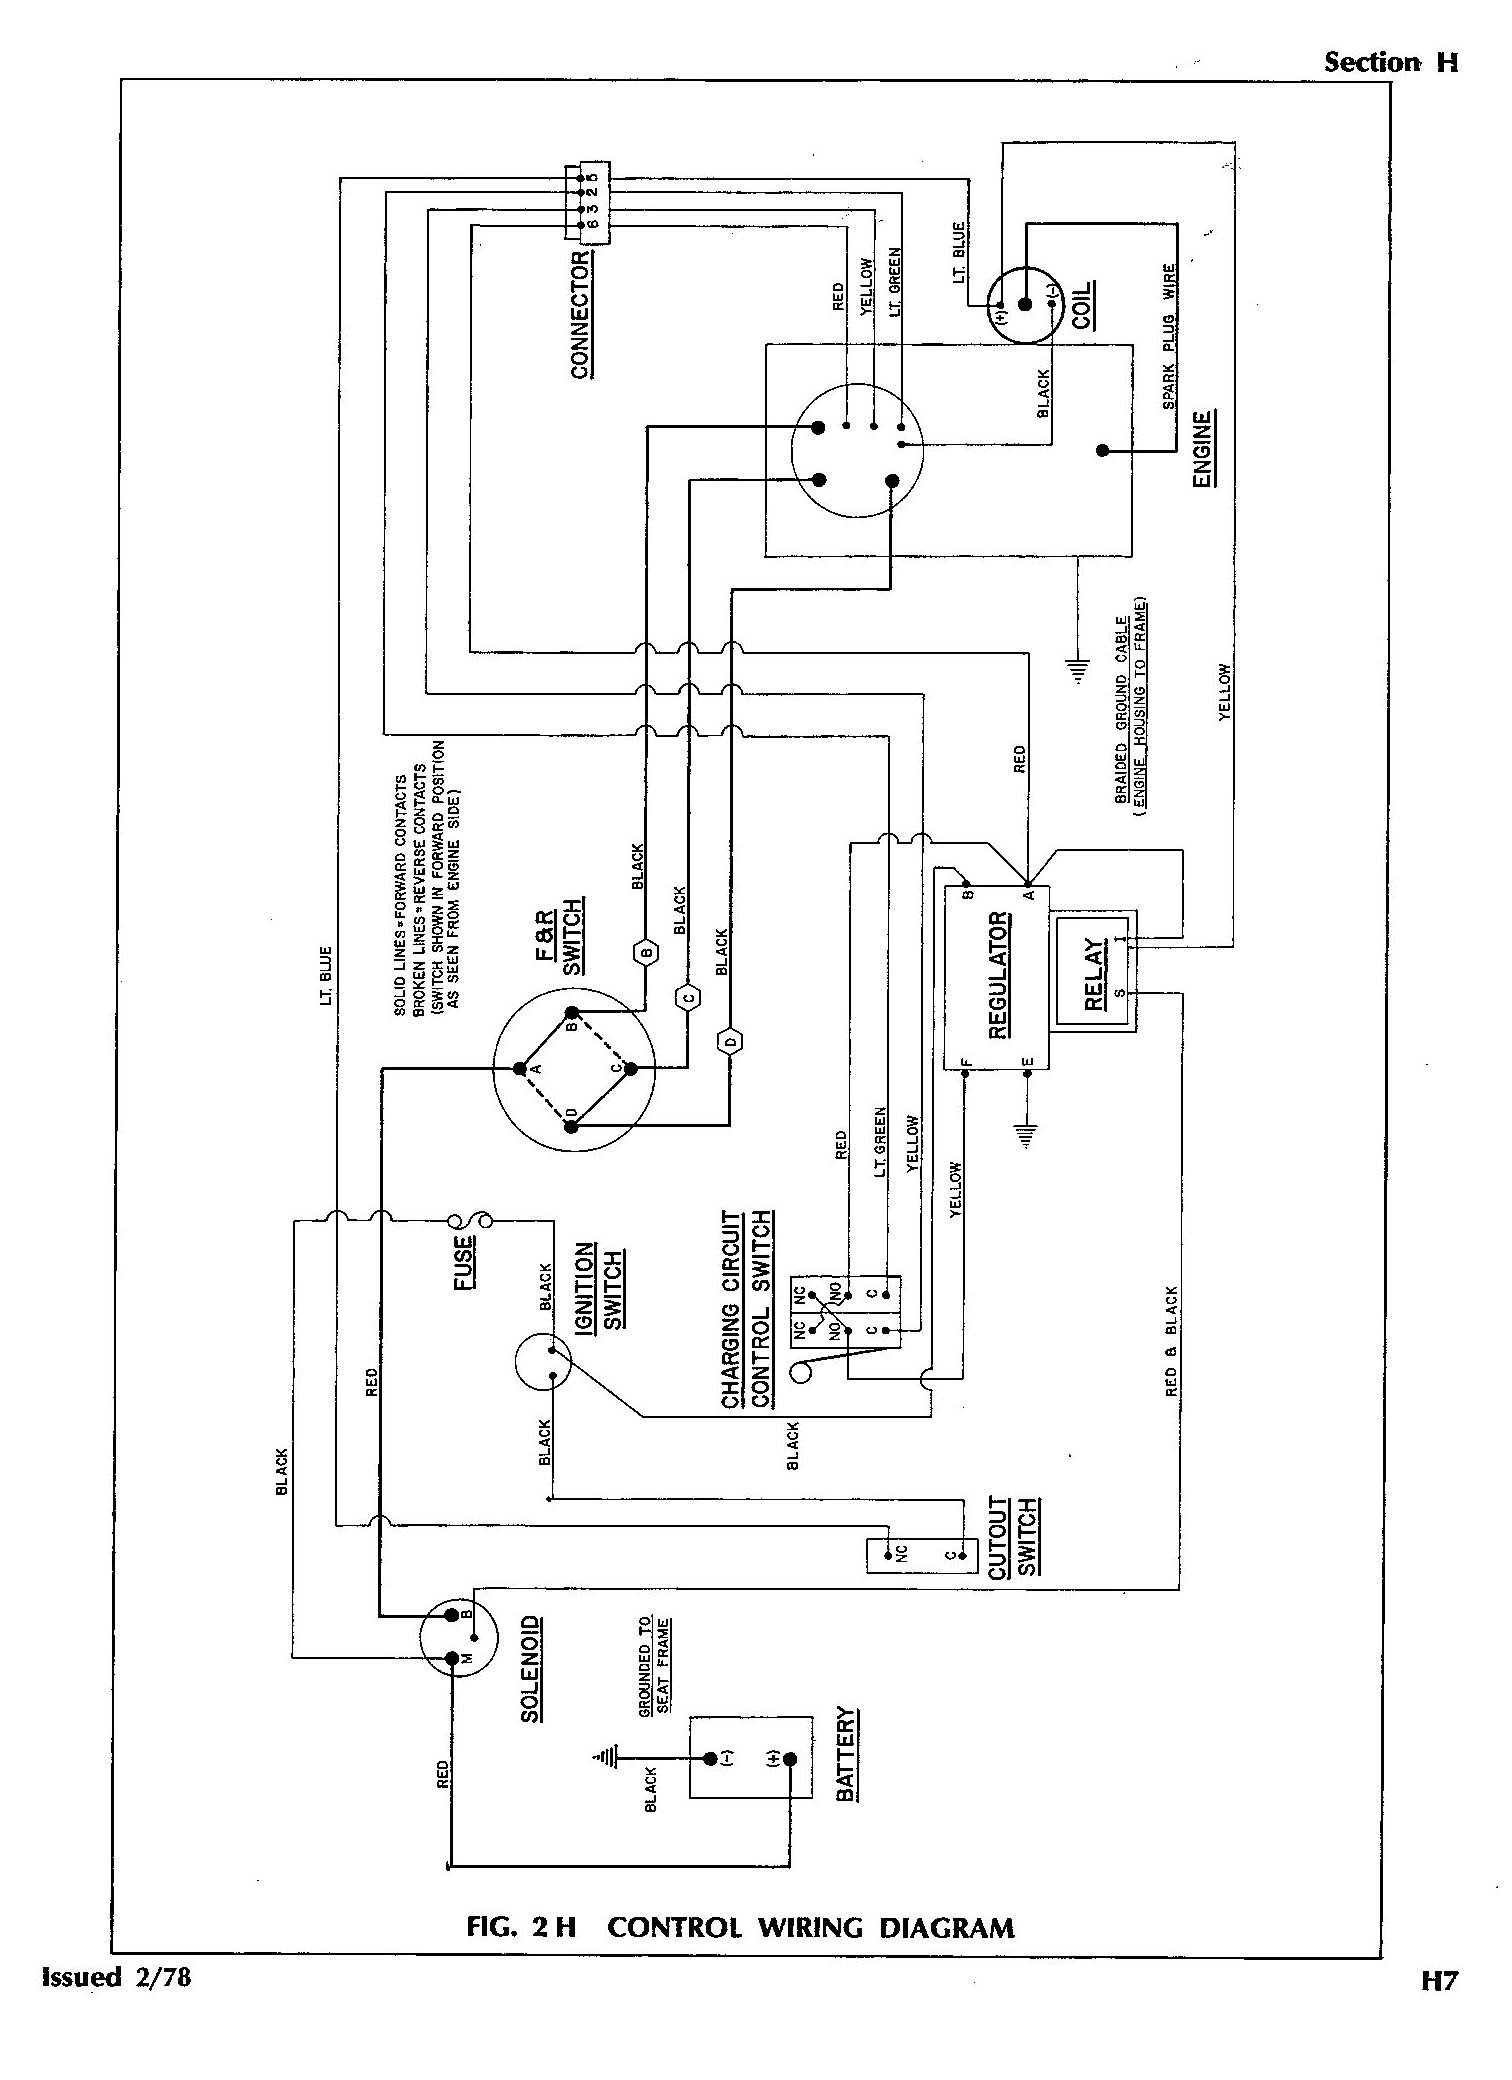 Club Cart Parts Diagram Starter Generator Wiring Diagram Golf Cart Reference Wiring Diagrams Of Club Cart Parts Diagram